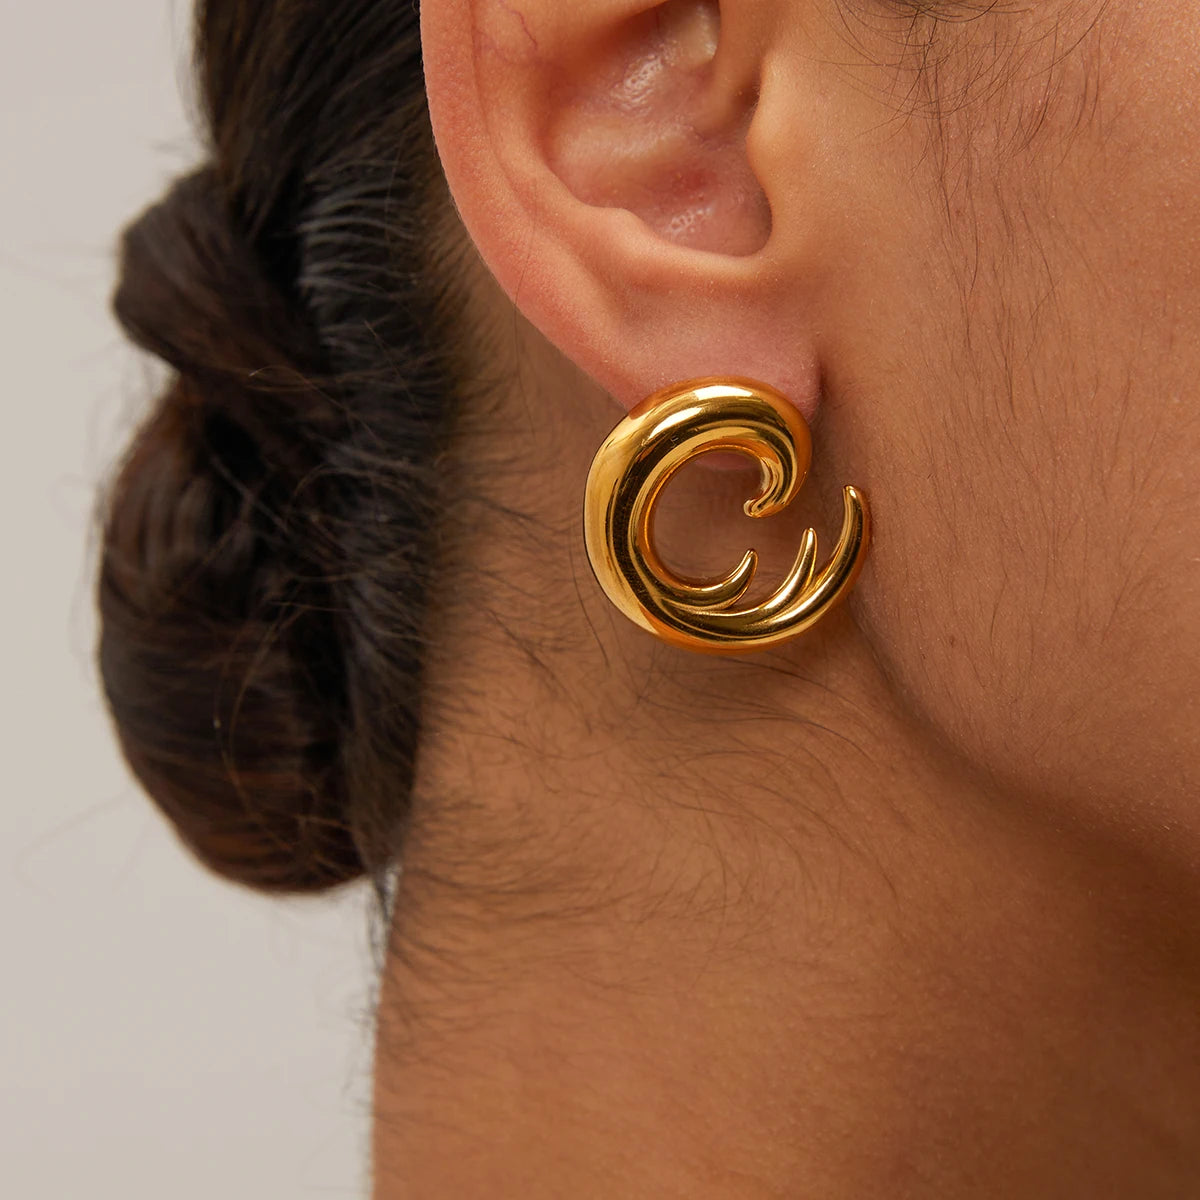 Assymetric Circle Stainless Steel Geometric Earrings